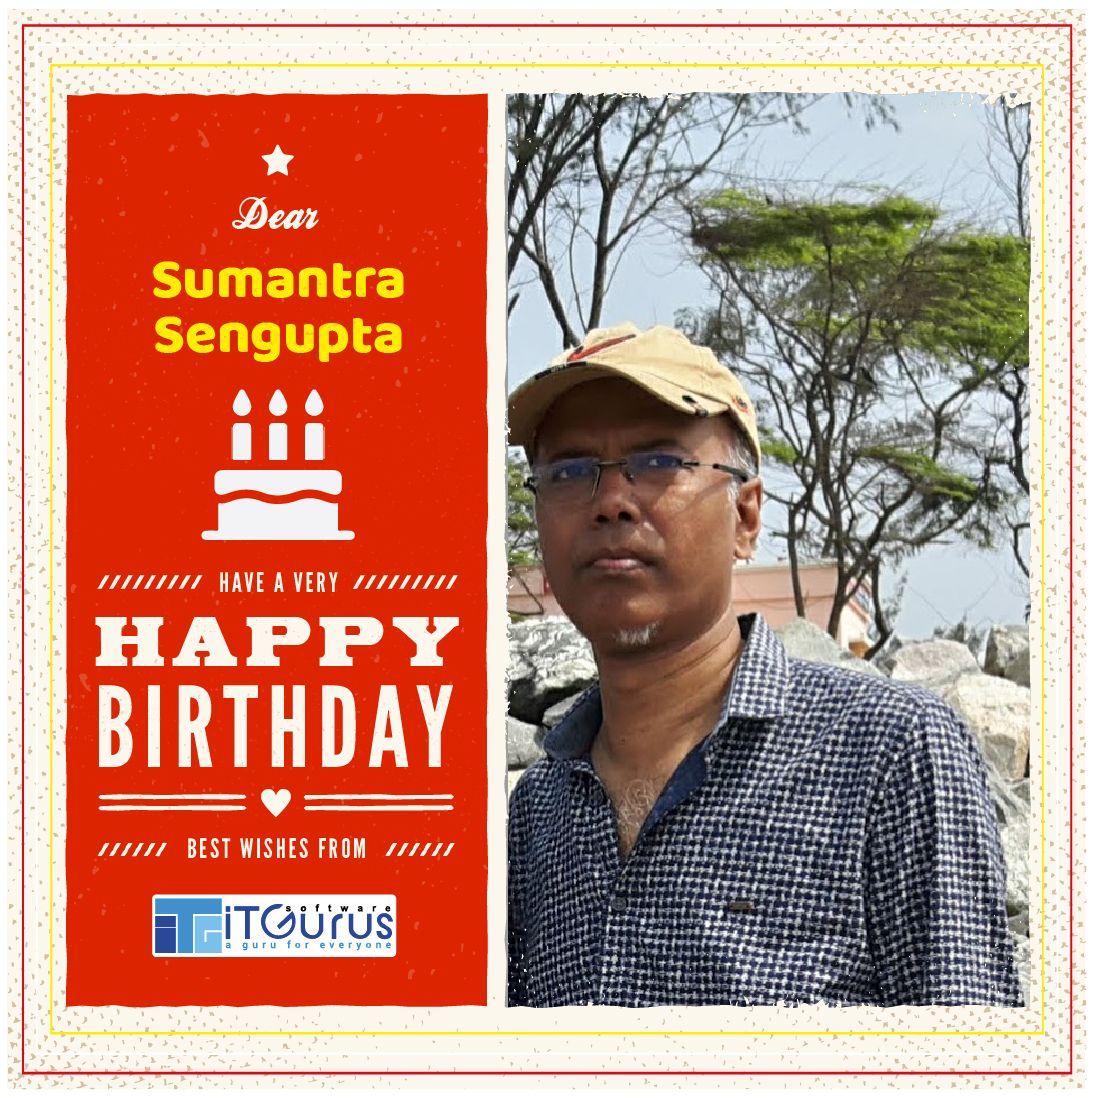 Cheers to you on your special day! 
Happy Birthday to @ Sumantra Sengupta from Team iT Gurus Software!

#birthday #birthdaycake #birthdayparty #birthdaycakes #birthdayballoons #birthdaydecoration #happybd #happybday #birthdayinoffice